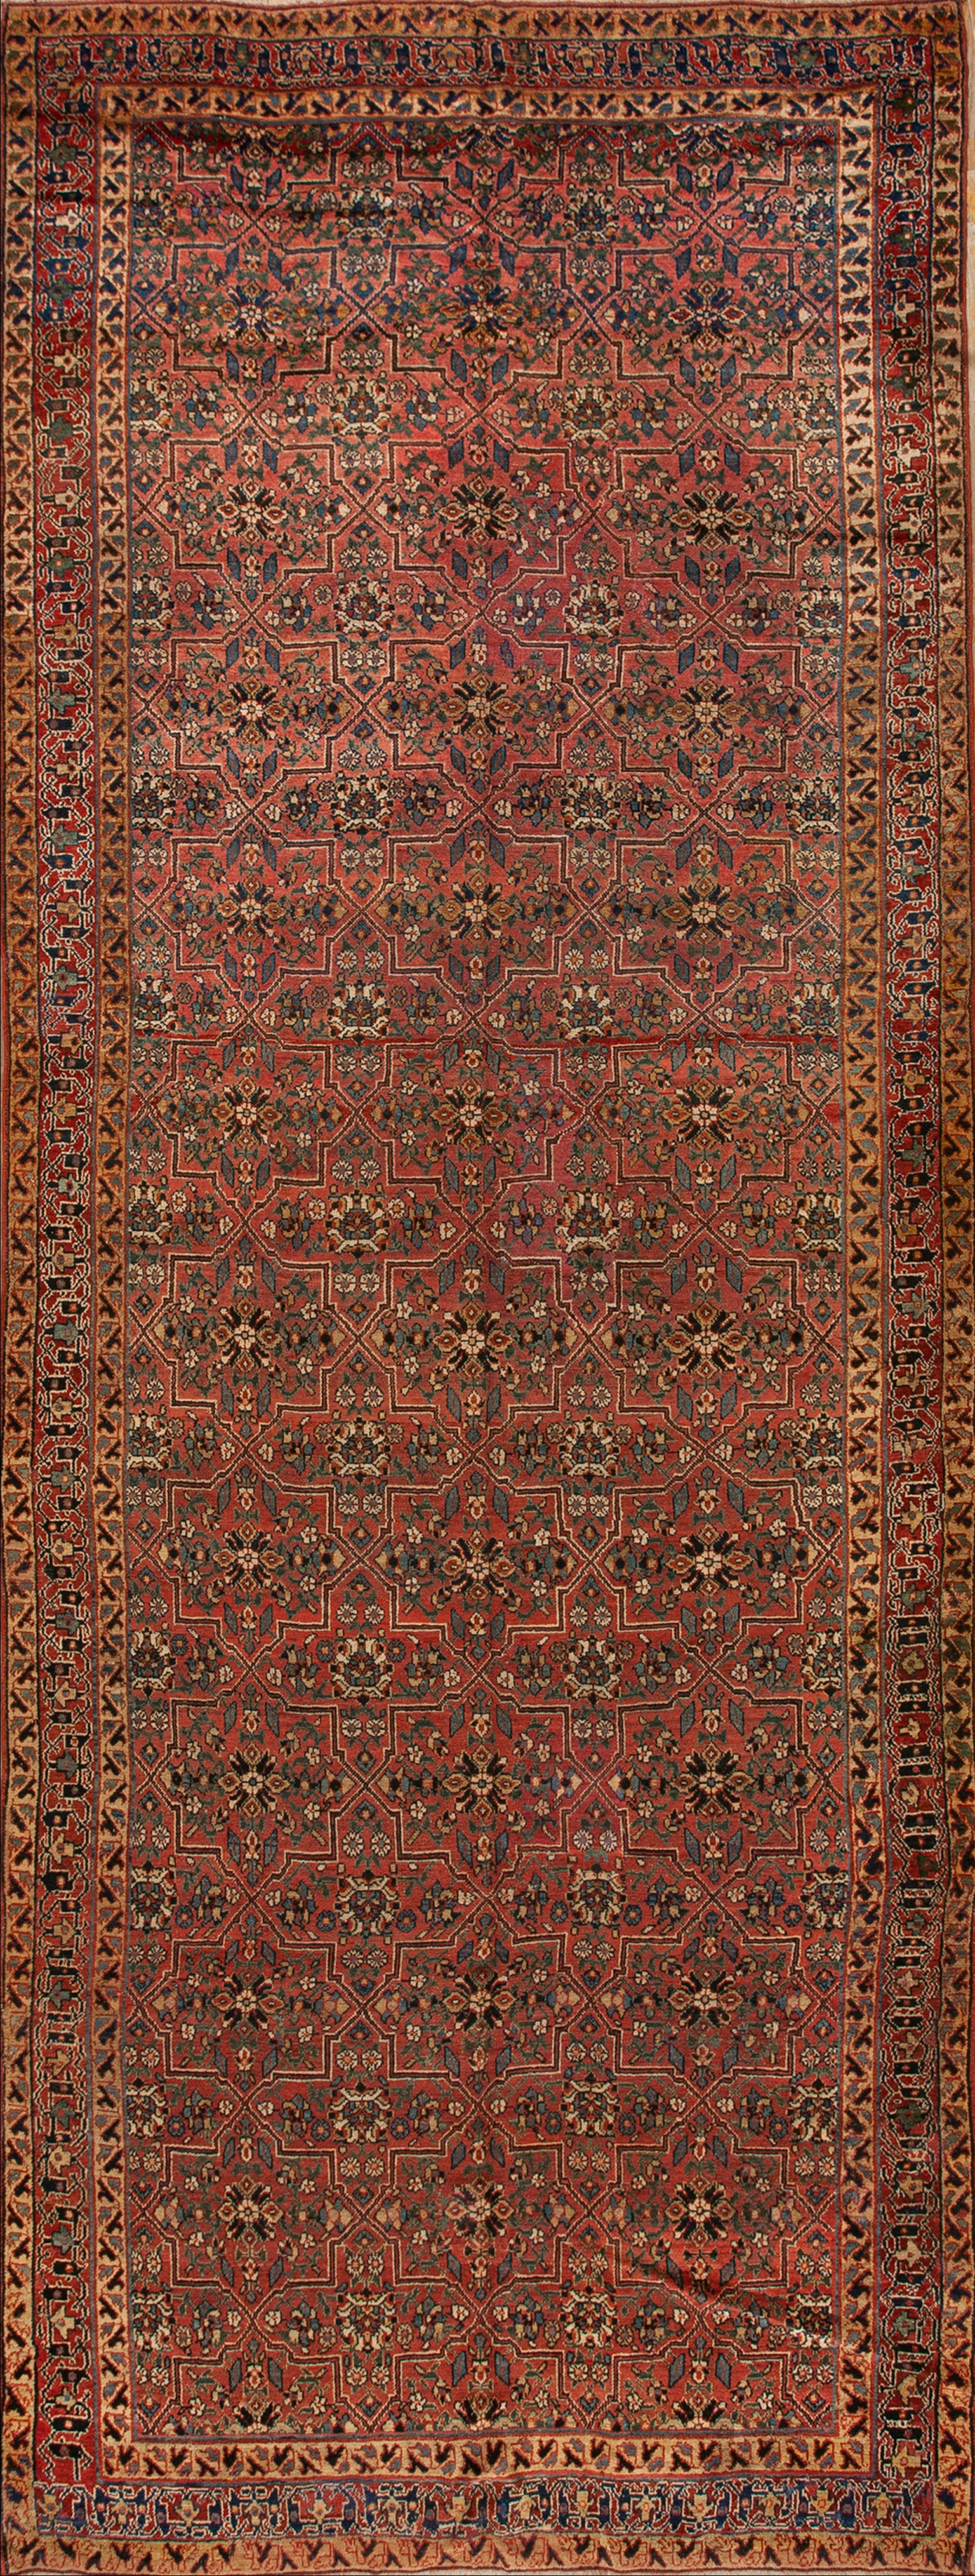 19th Century N.W. Persian Galley Carpet ( 6'6" x 17'6" - 198 x 533 )